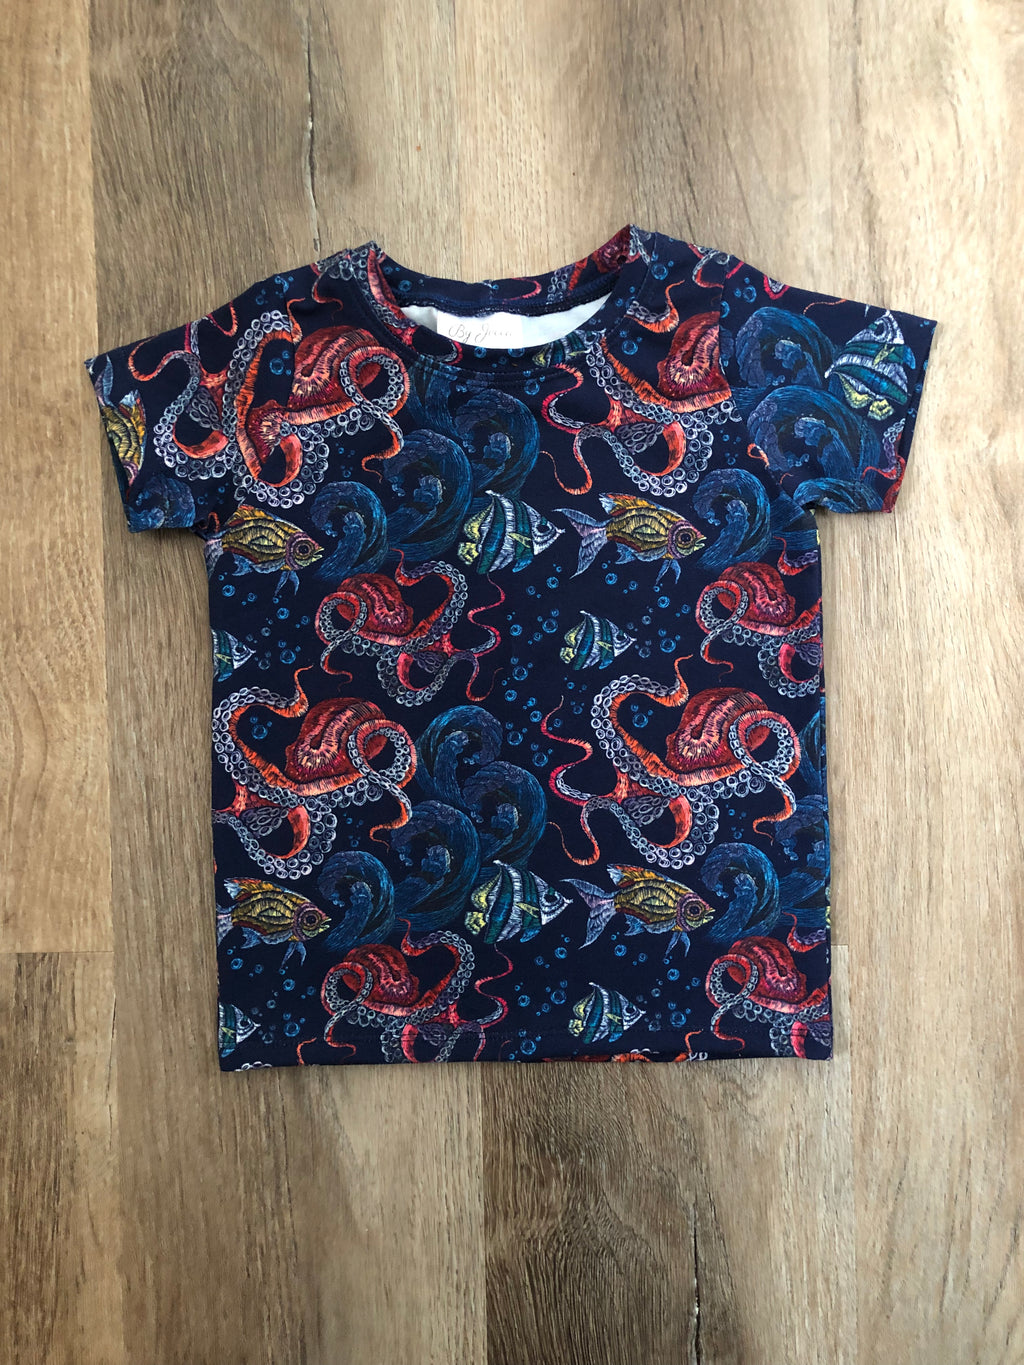 Kraken T-shirt size 2